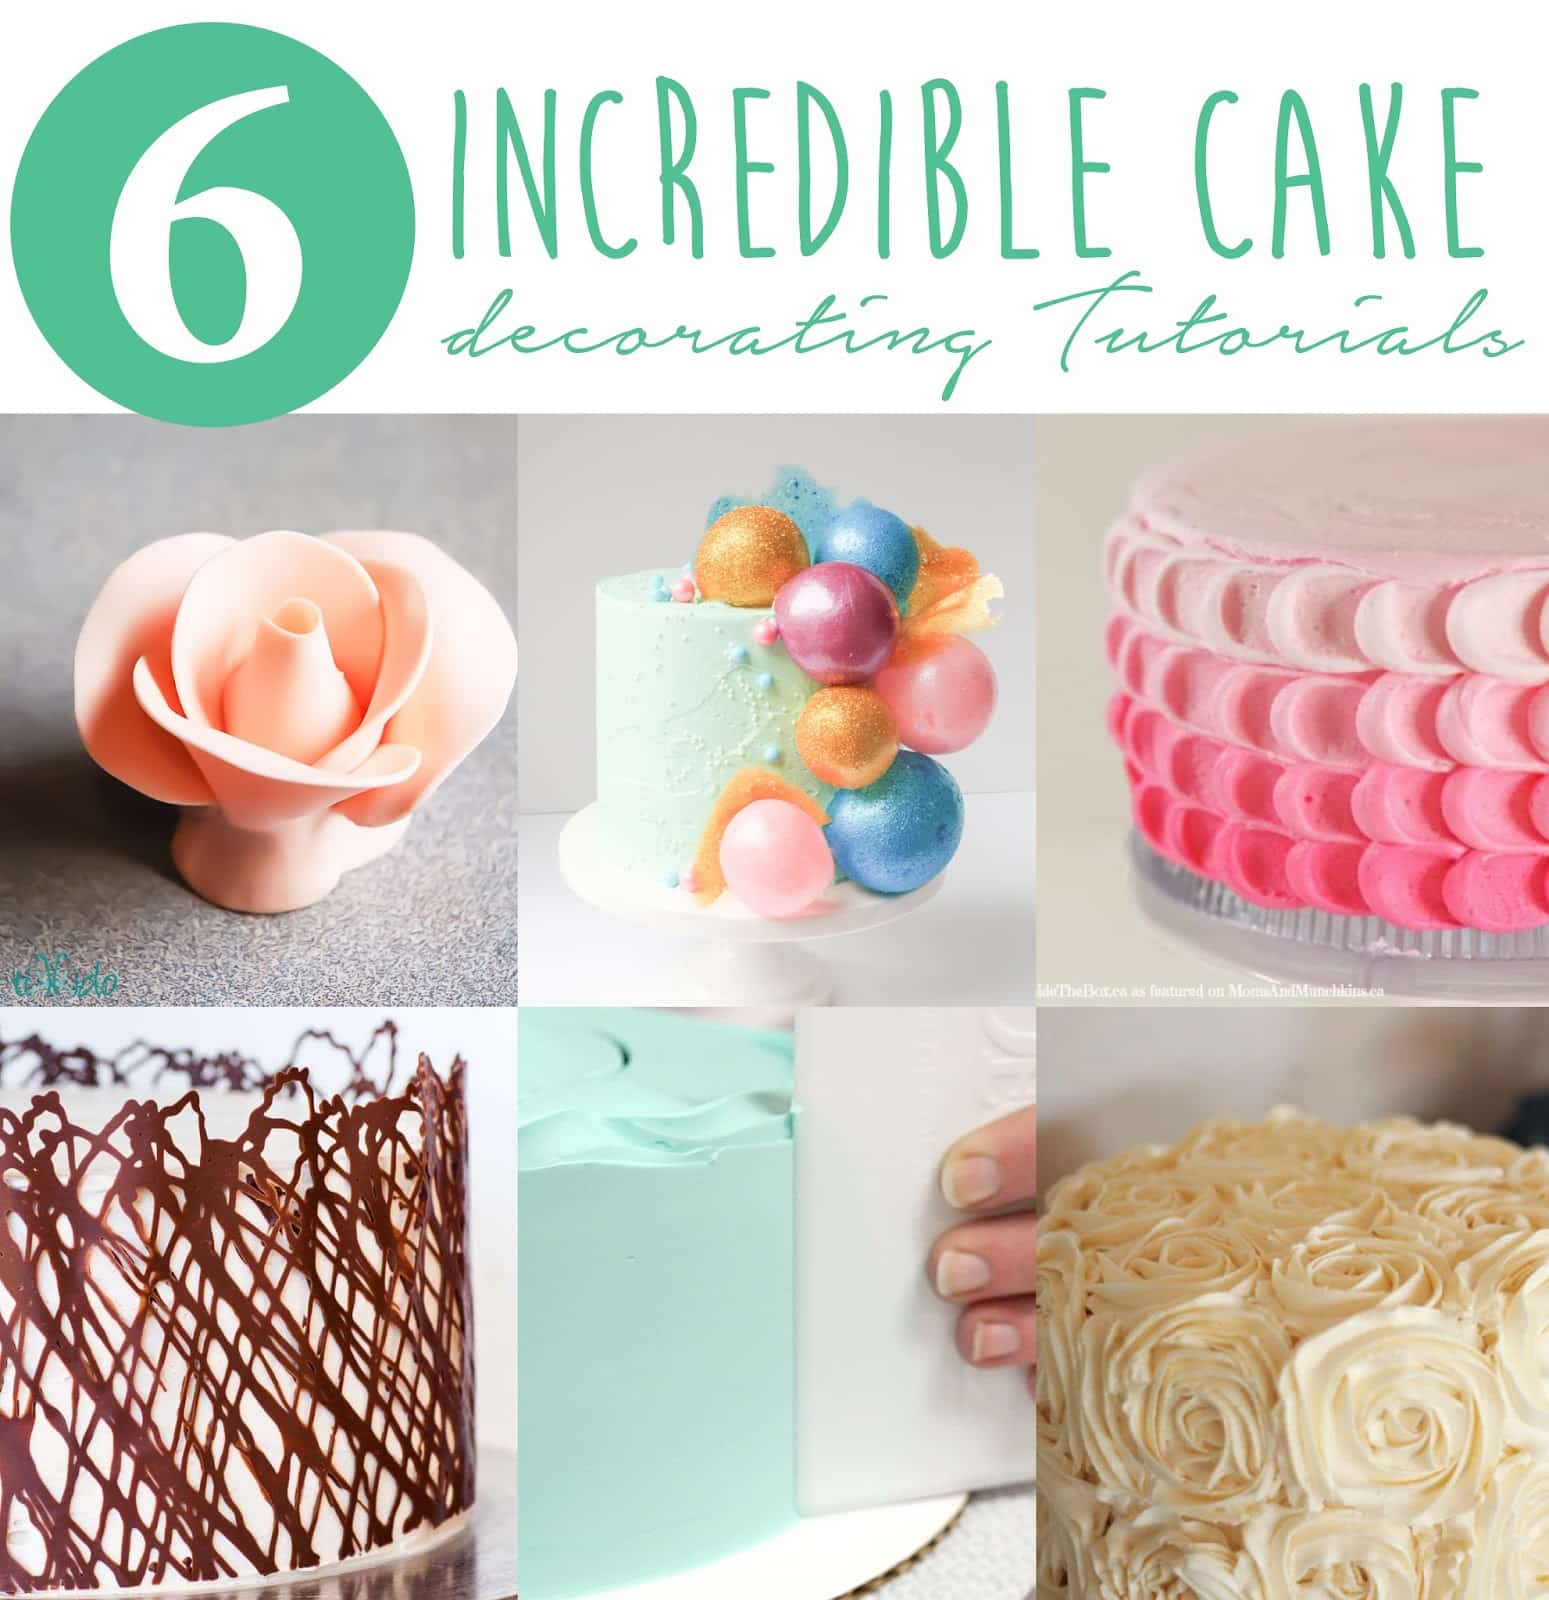 6 Incredible Cake Decorating Tutorials